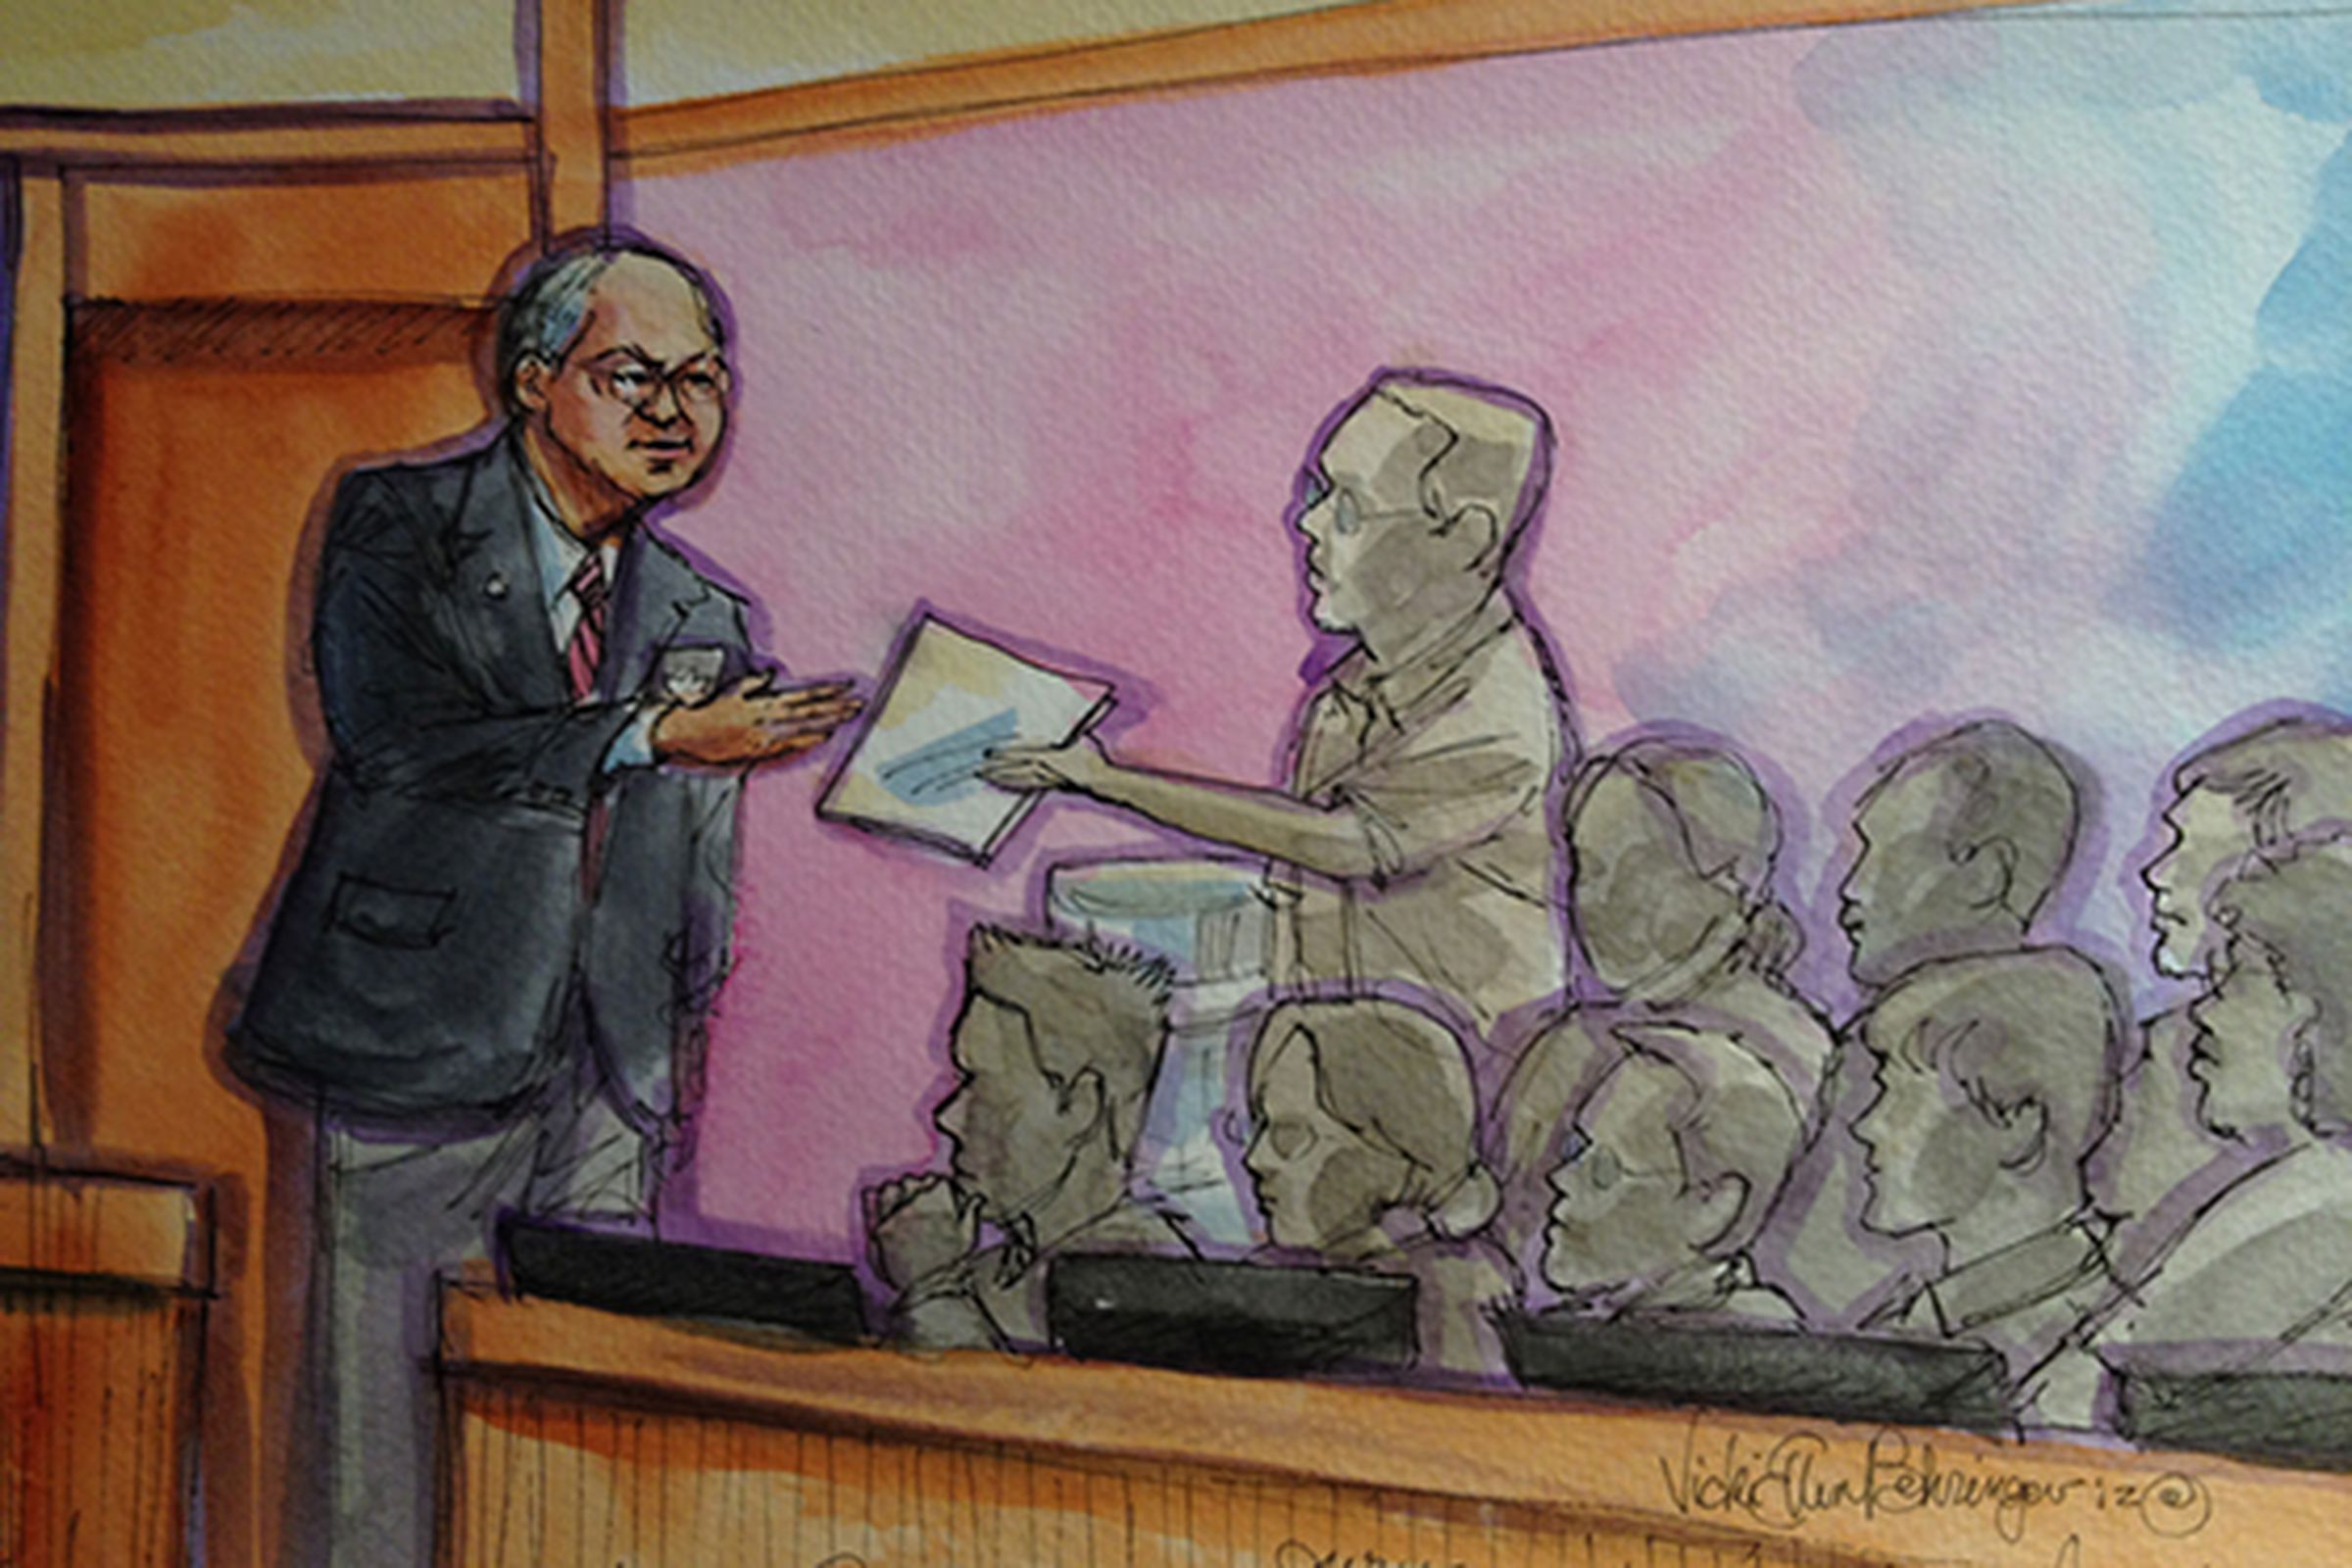 Apple v. Samsung jury hands in the verdict